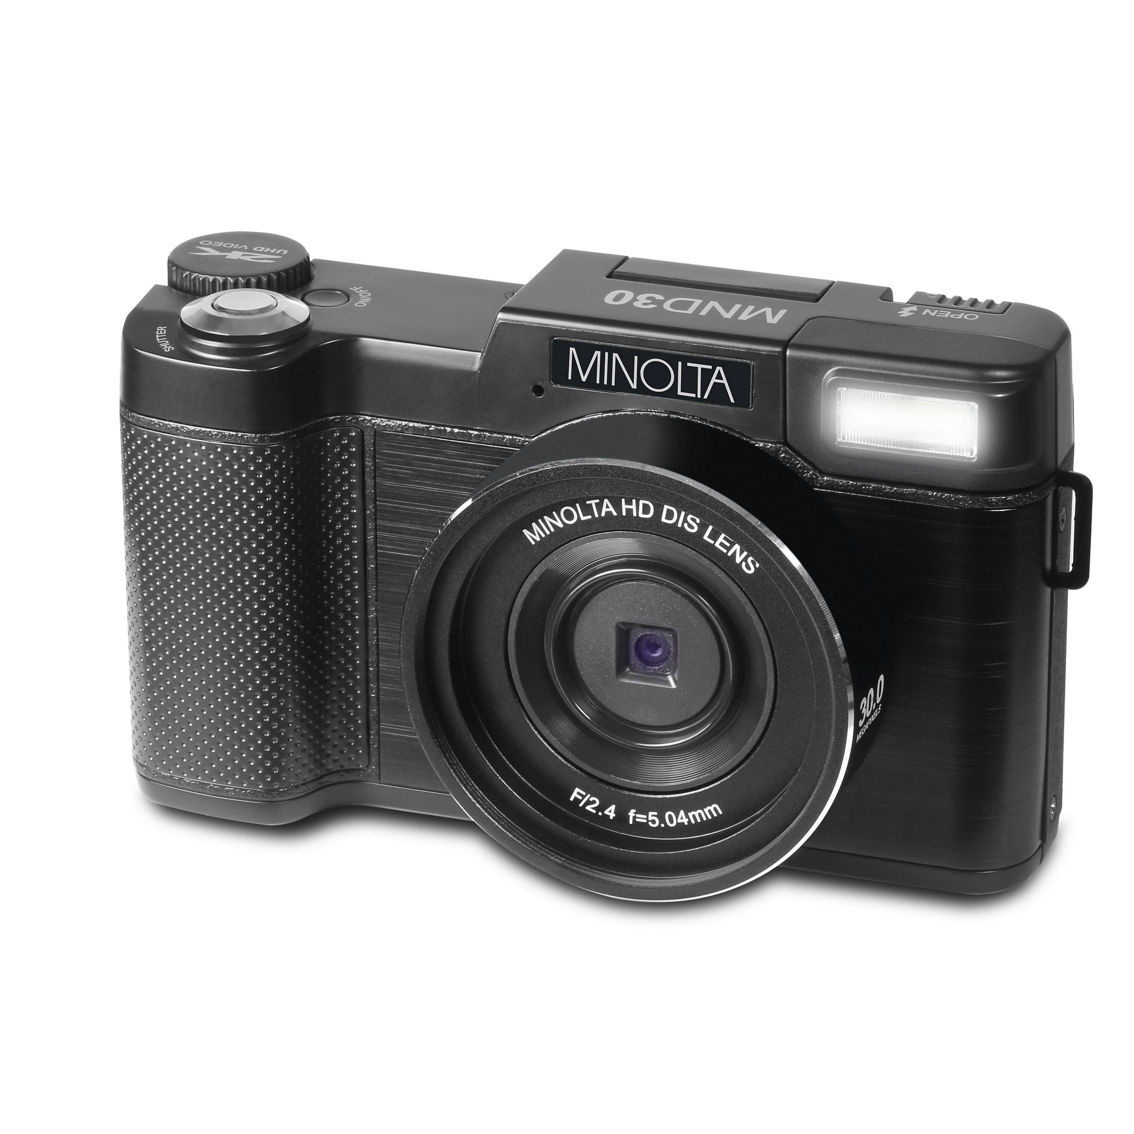 Minolta MND30 30 Mega Pixels Digital Camera with Flip-up Screen - Image 4 of 4